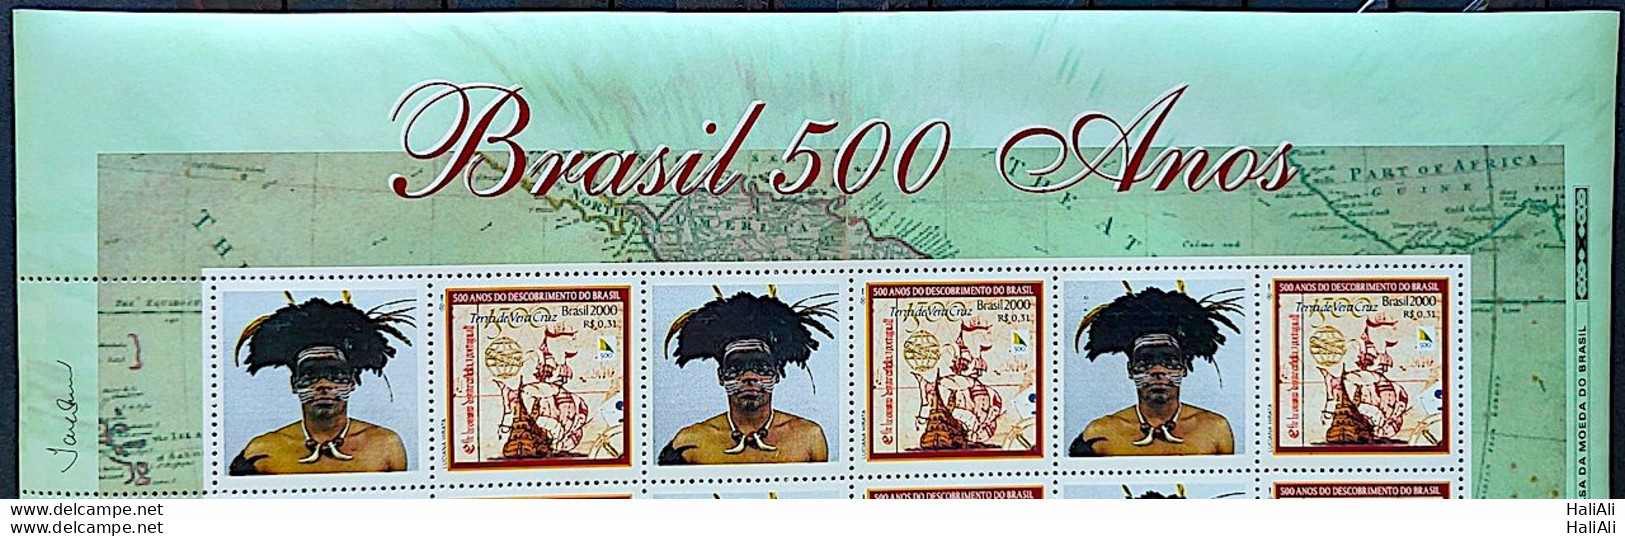 C 2254 Brazil Stamp Custom Discovery Of Brazil Indian Portugal 2000 3 Brazil Stamps Vignette Brasil 500 Years - Ungebraucht